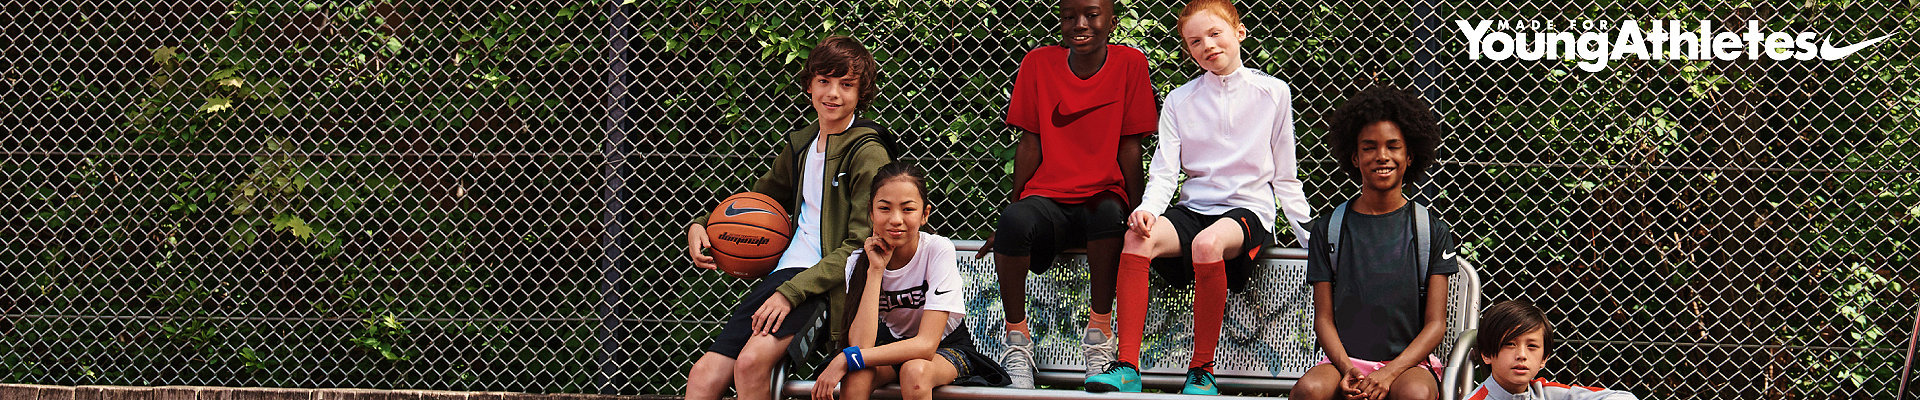 matriz tenaz Fácil de suceder Nike Young Athletes Collection | Sport Chek